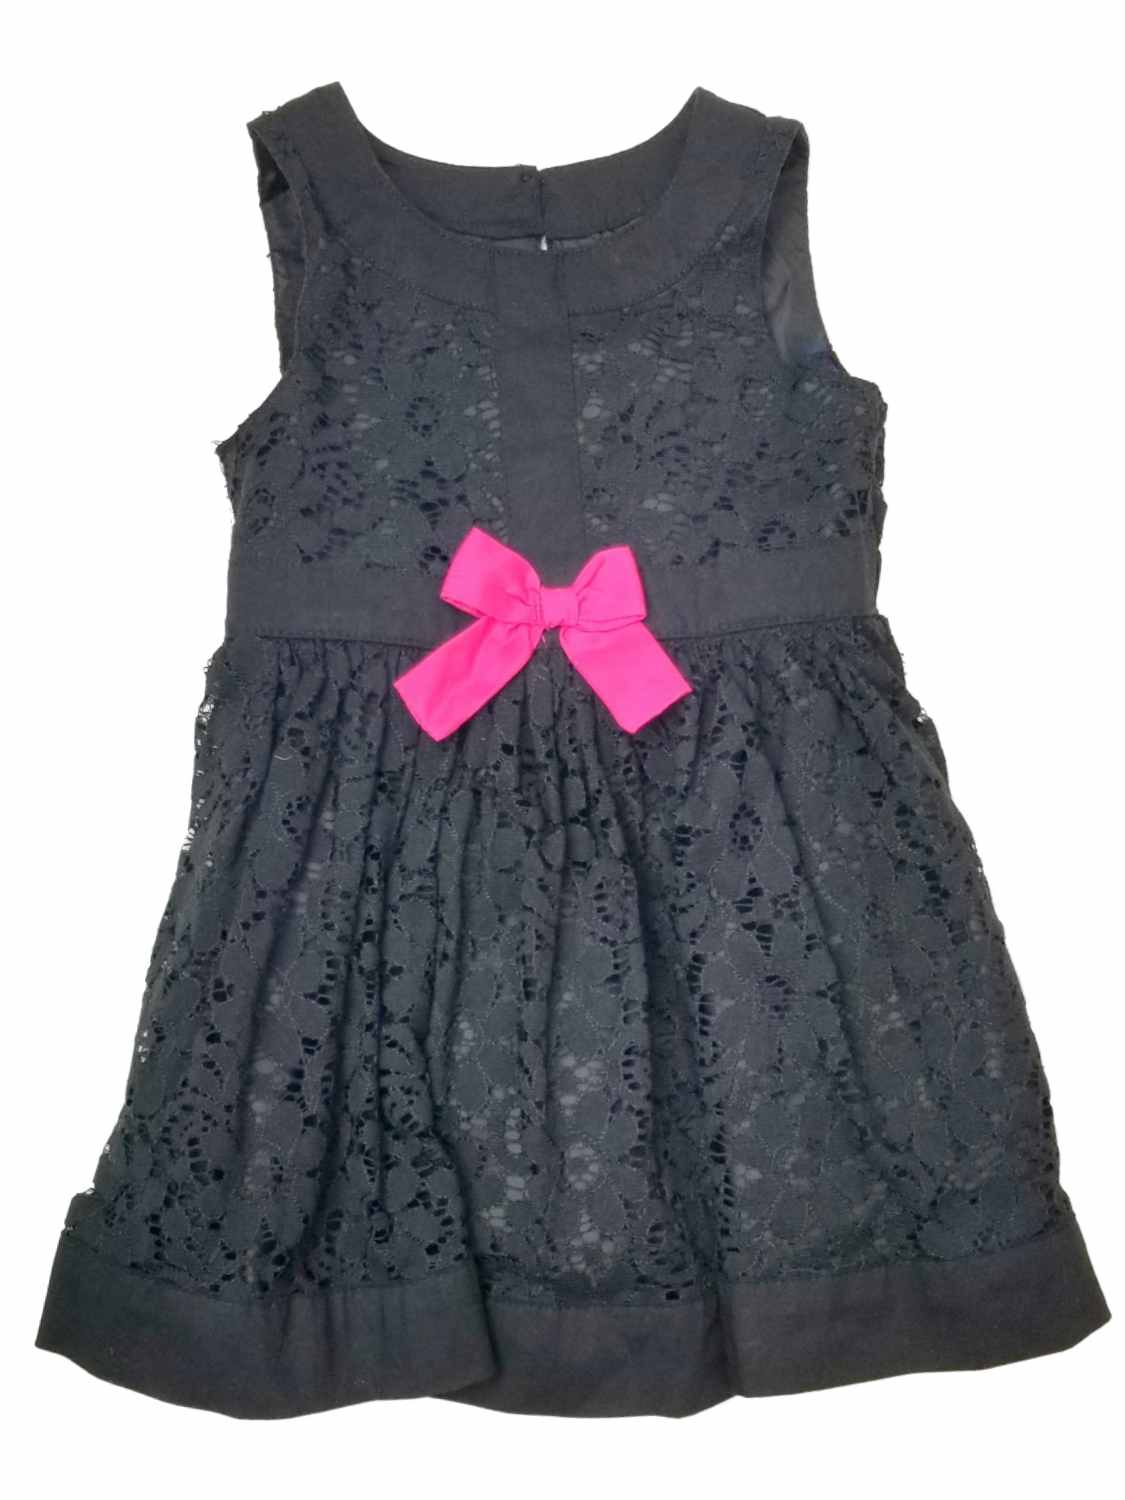 Osh Kosh BGosh Infant Girls Black Lace Holiday Fancy Party Dress Pink Bow 12M